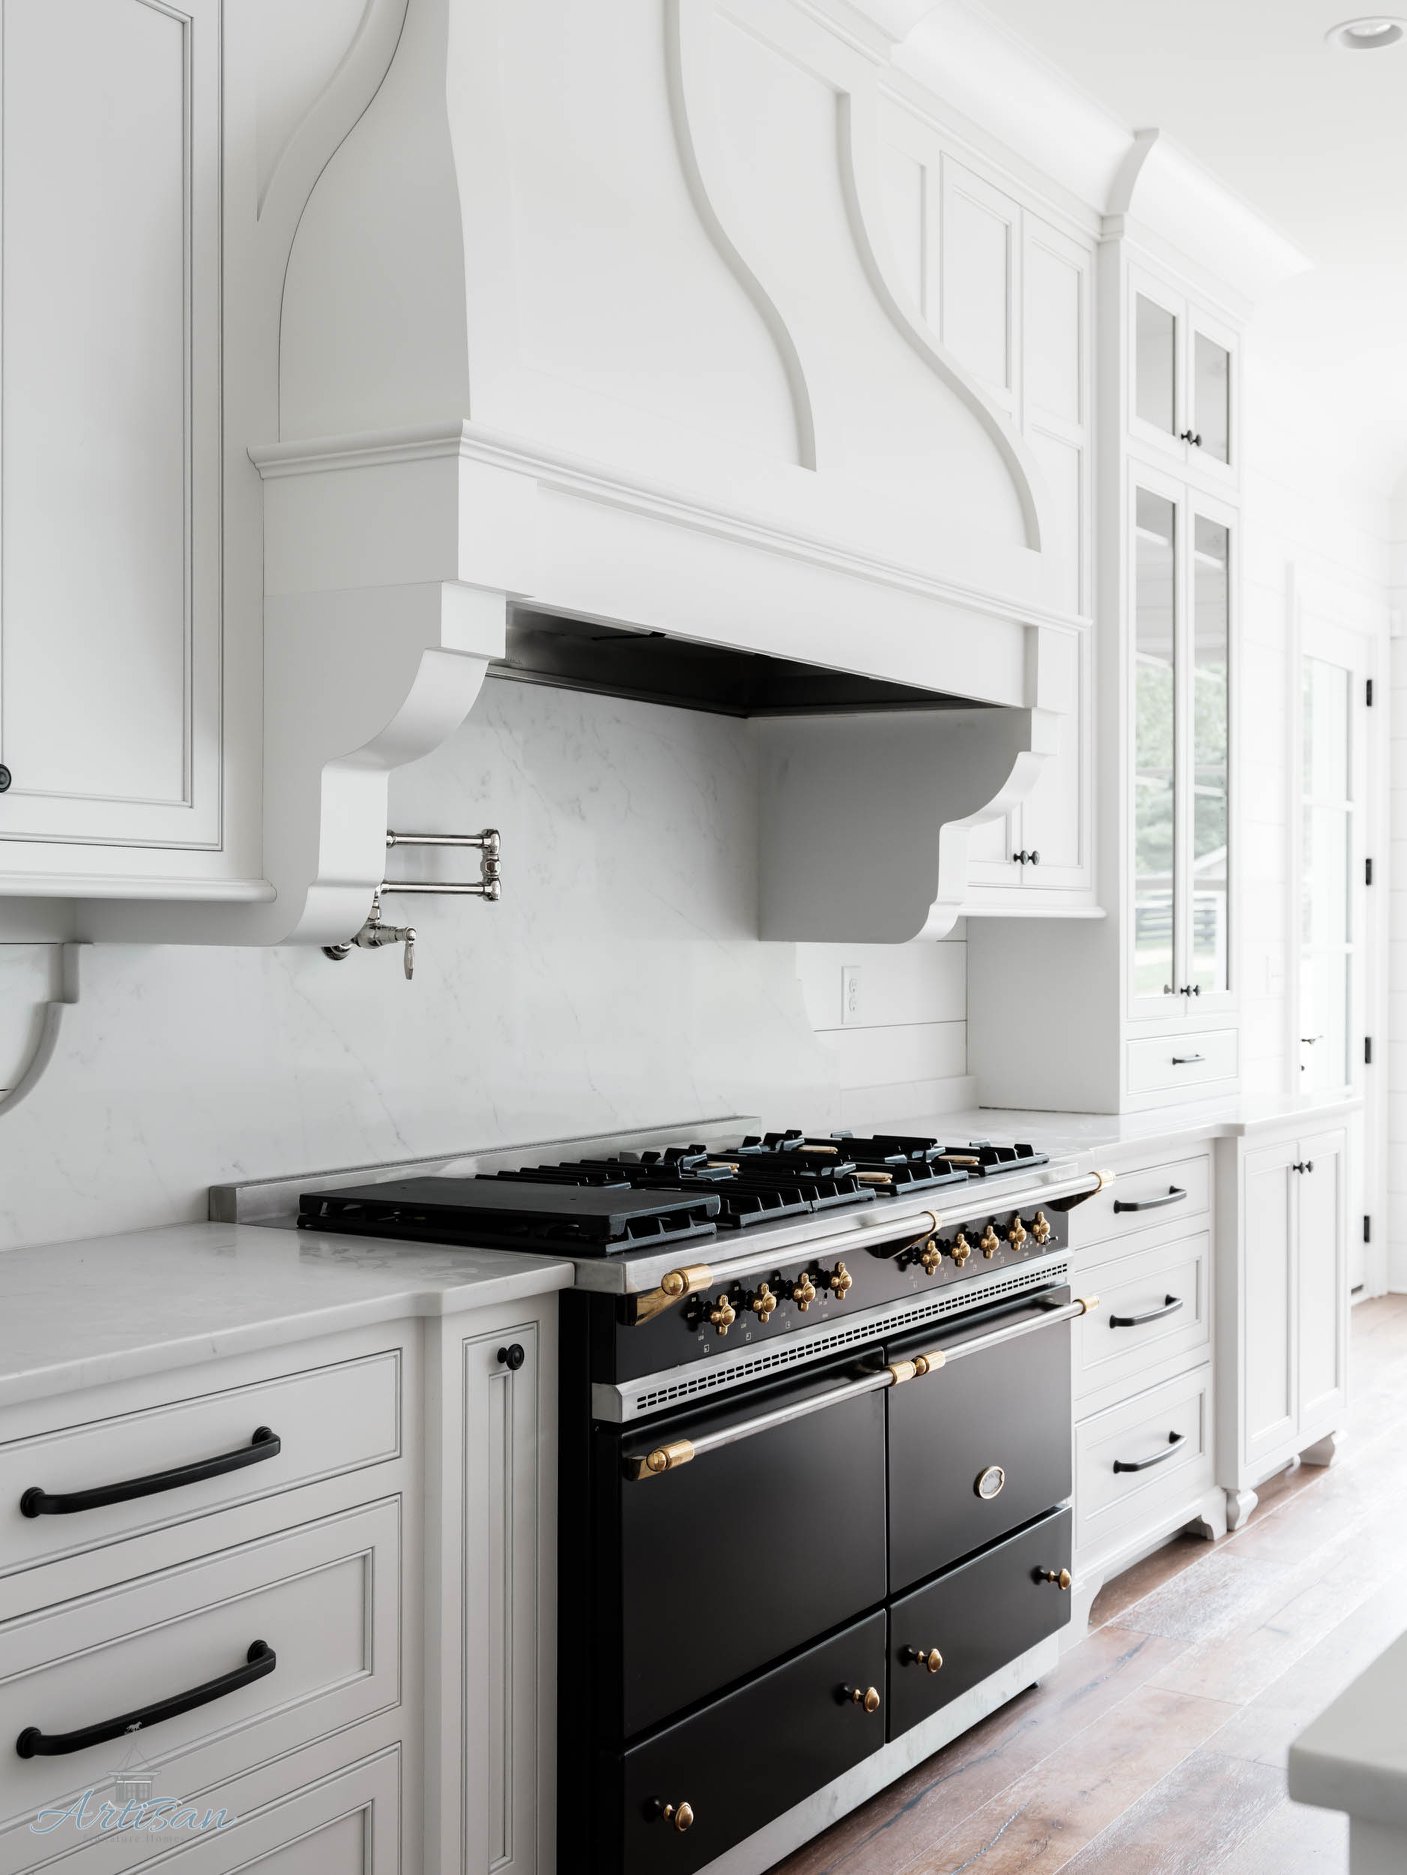 Do New Appliances Increase Home Value?